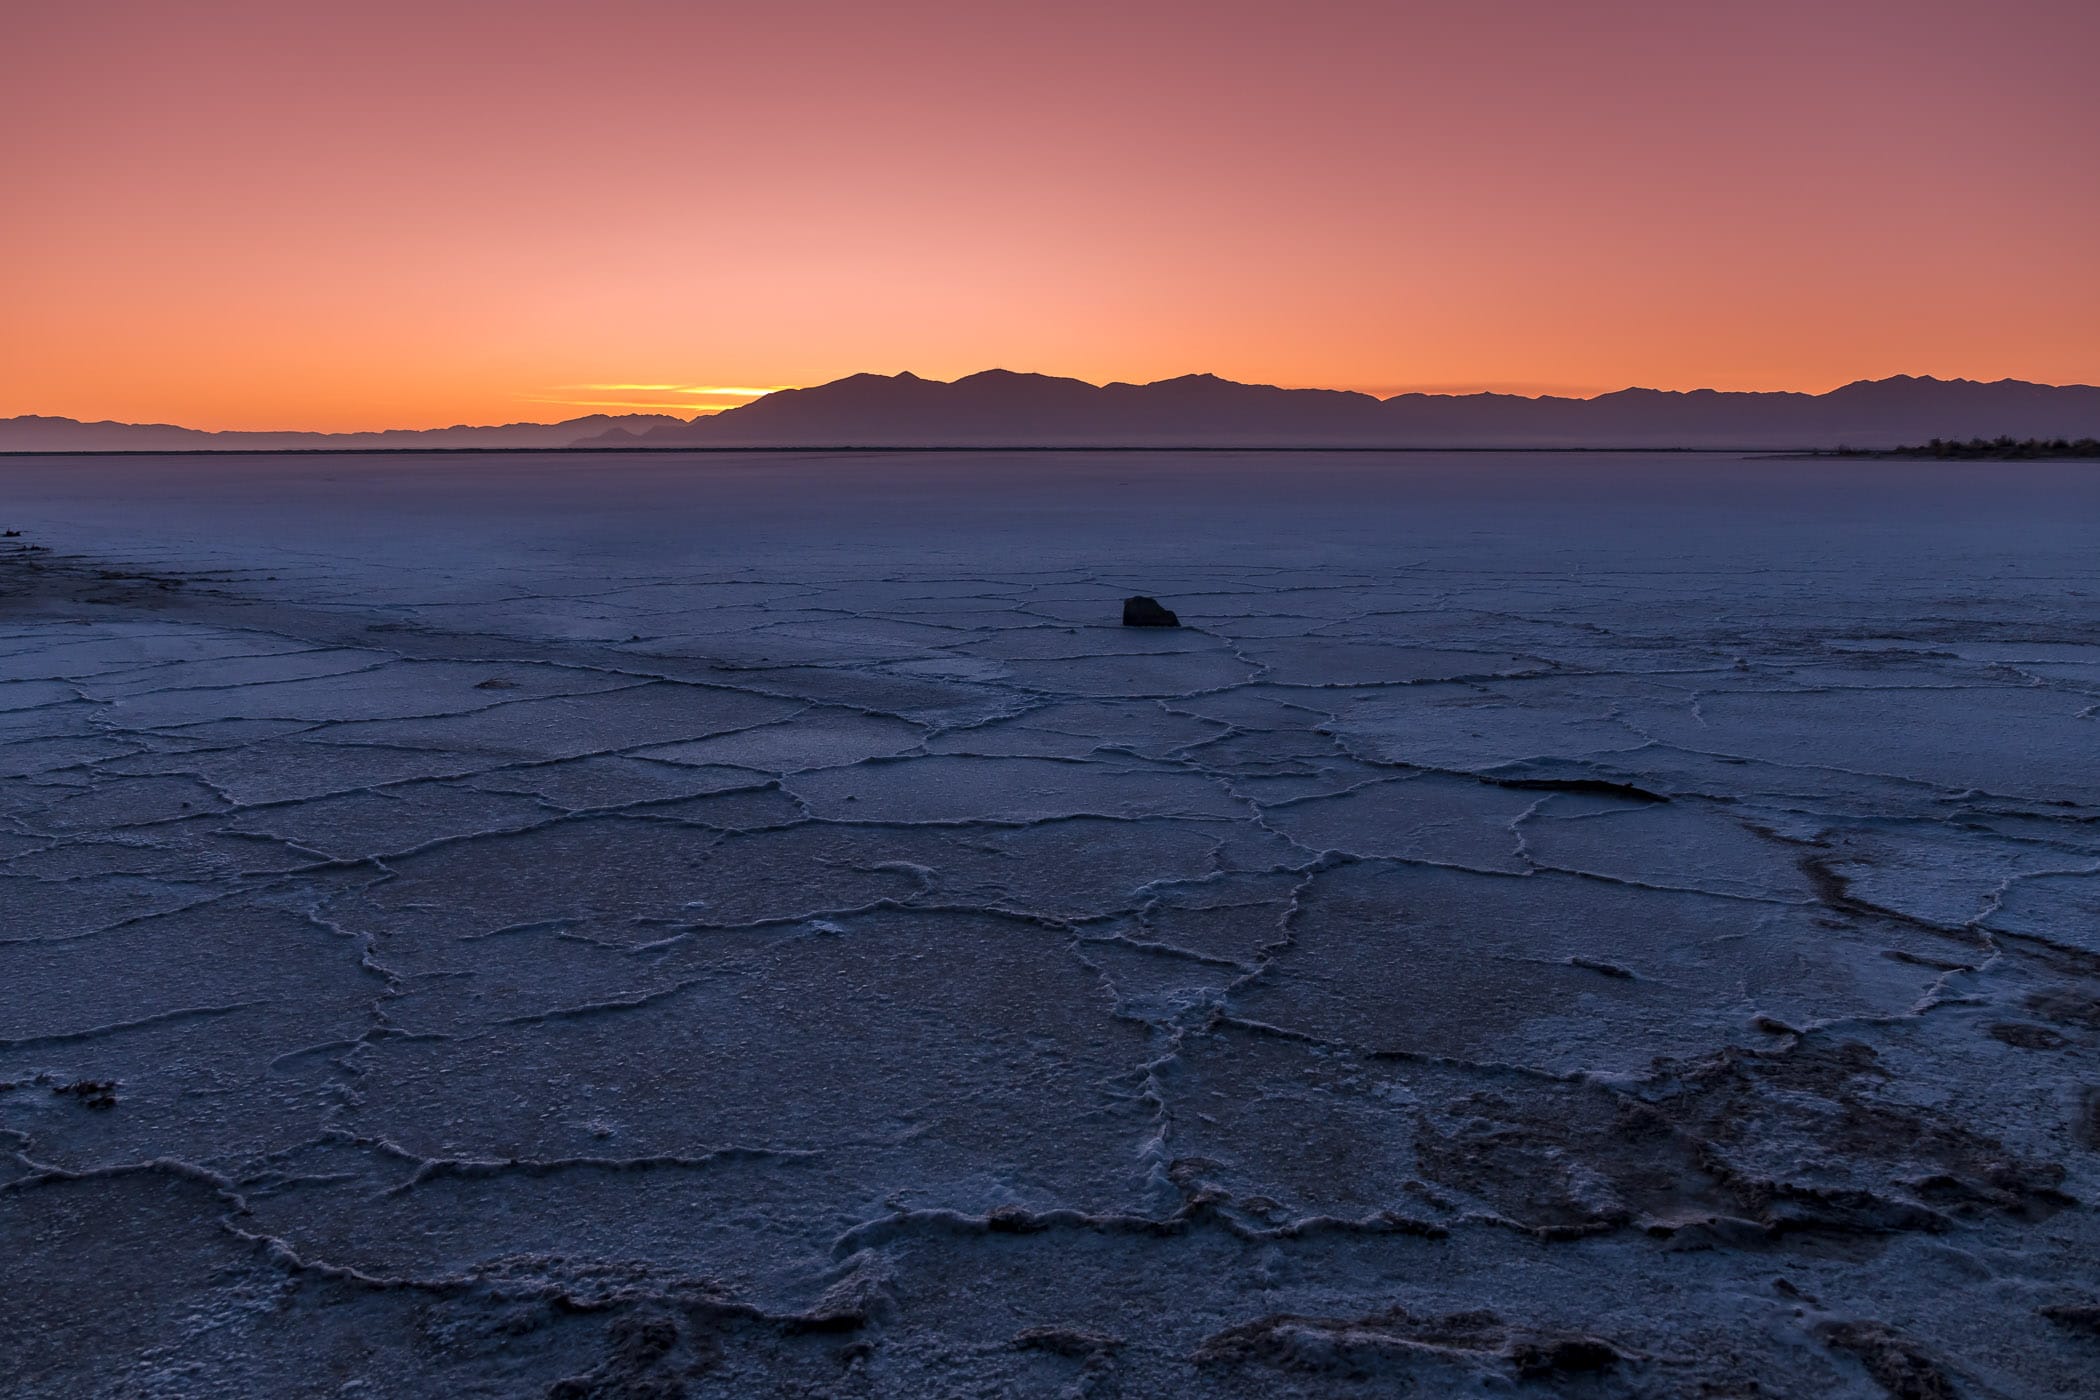 The sun rises on the dried salt flat shore of the Great Salt Lake, Utah.